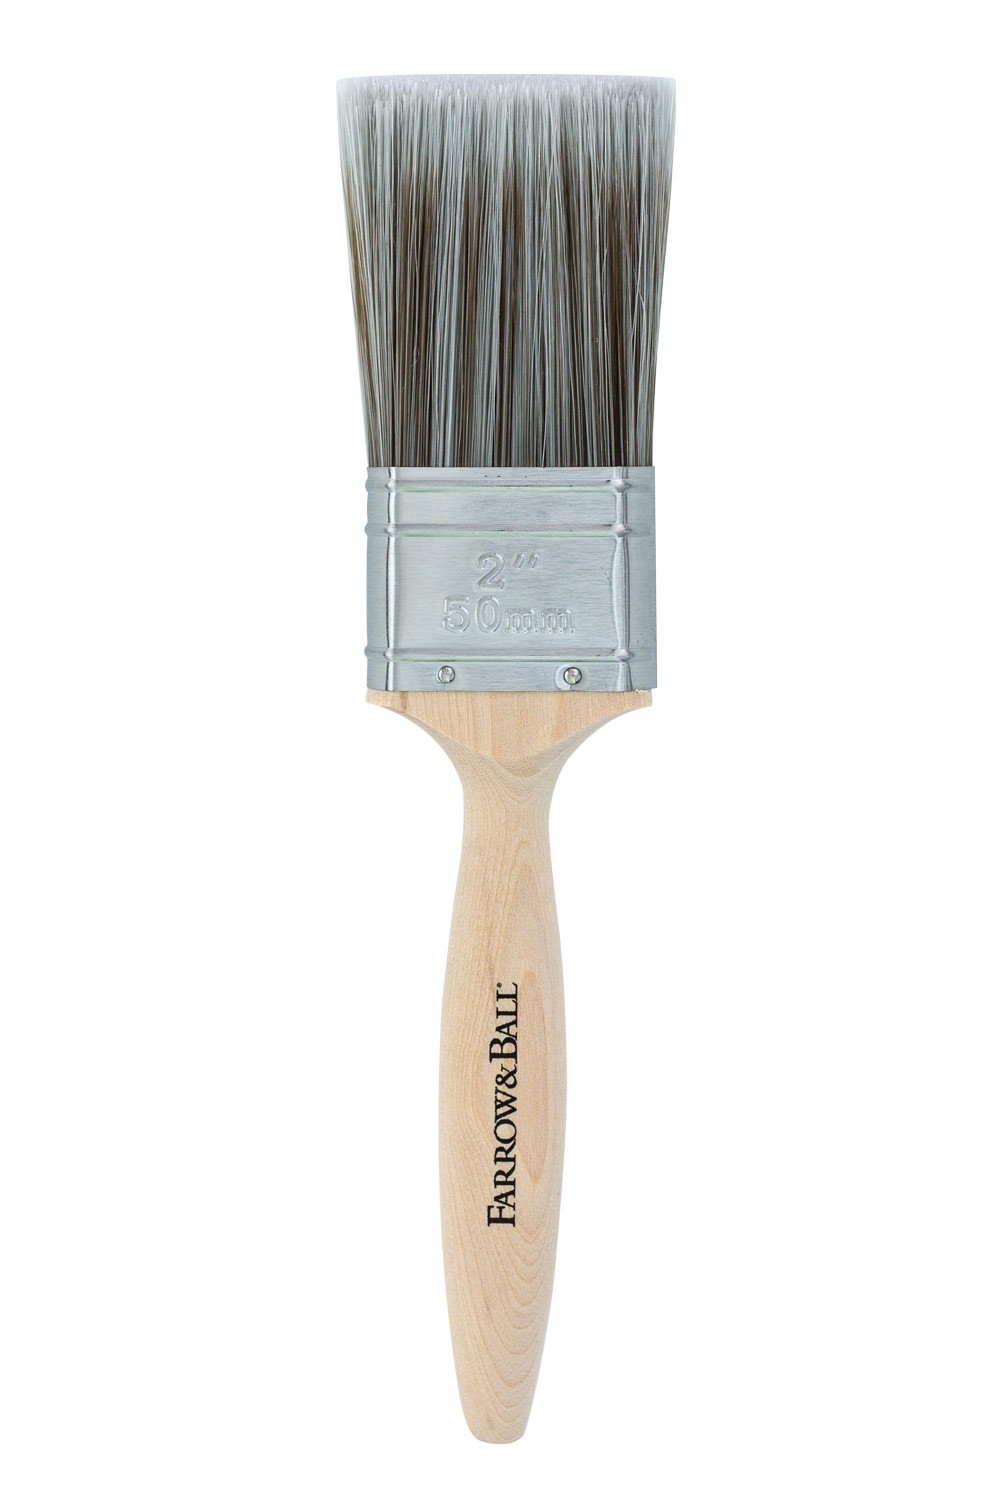 2-inch-paint-brush | Sarmazian Brothers Flooring